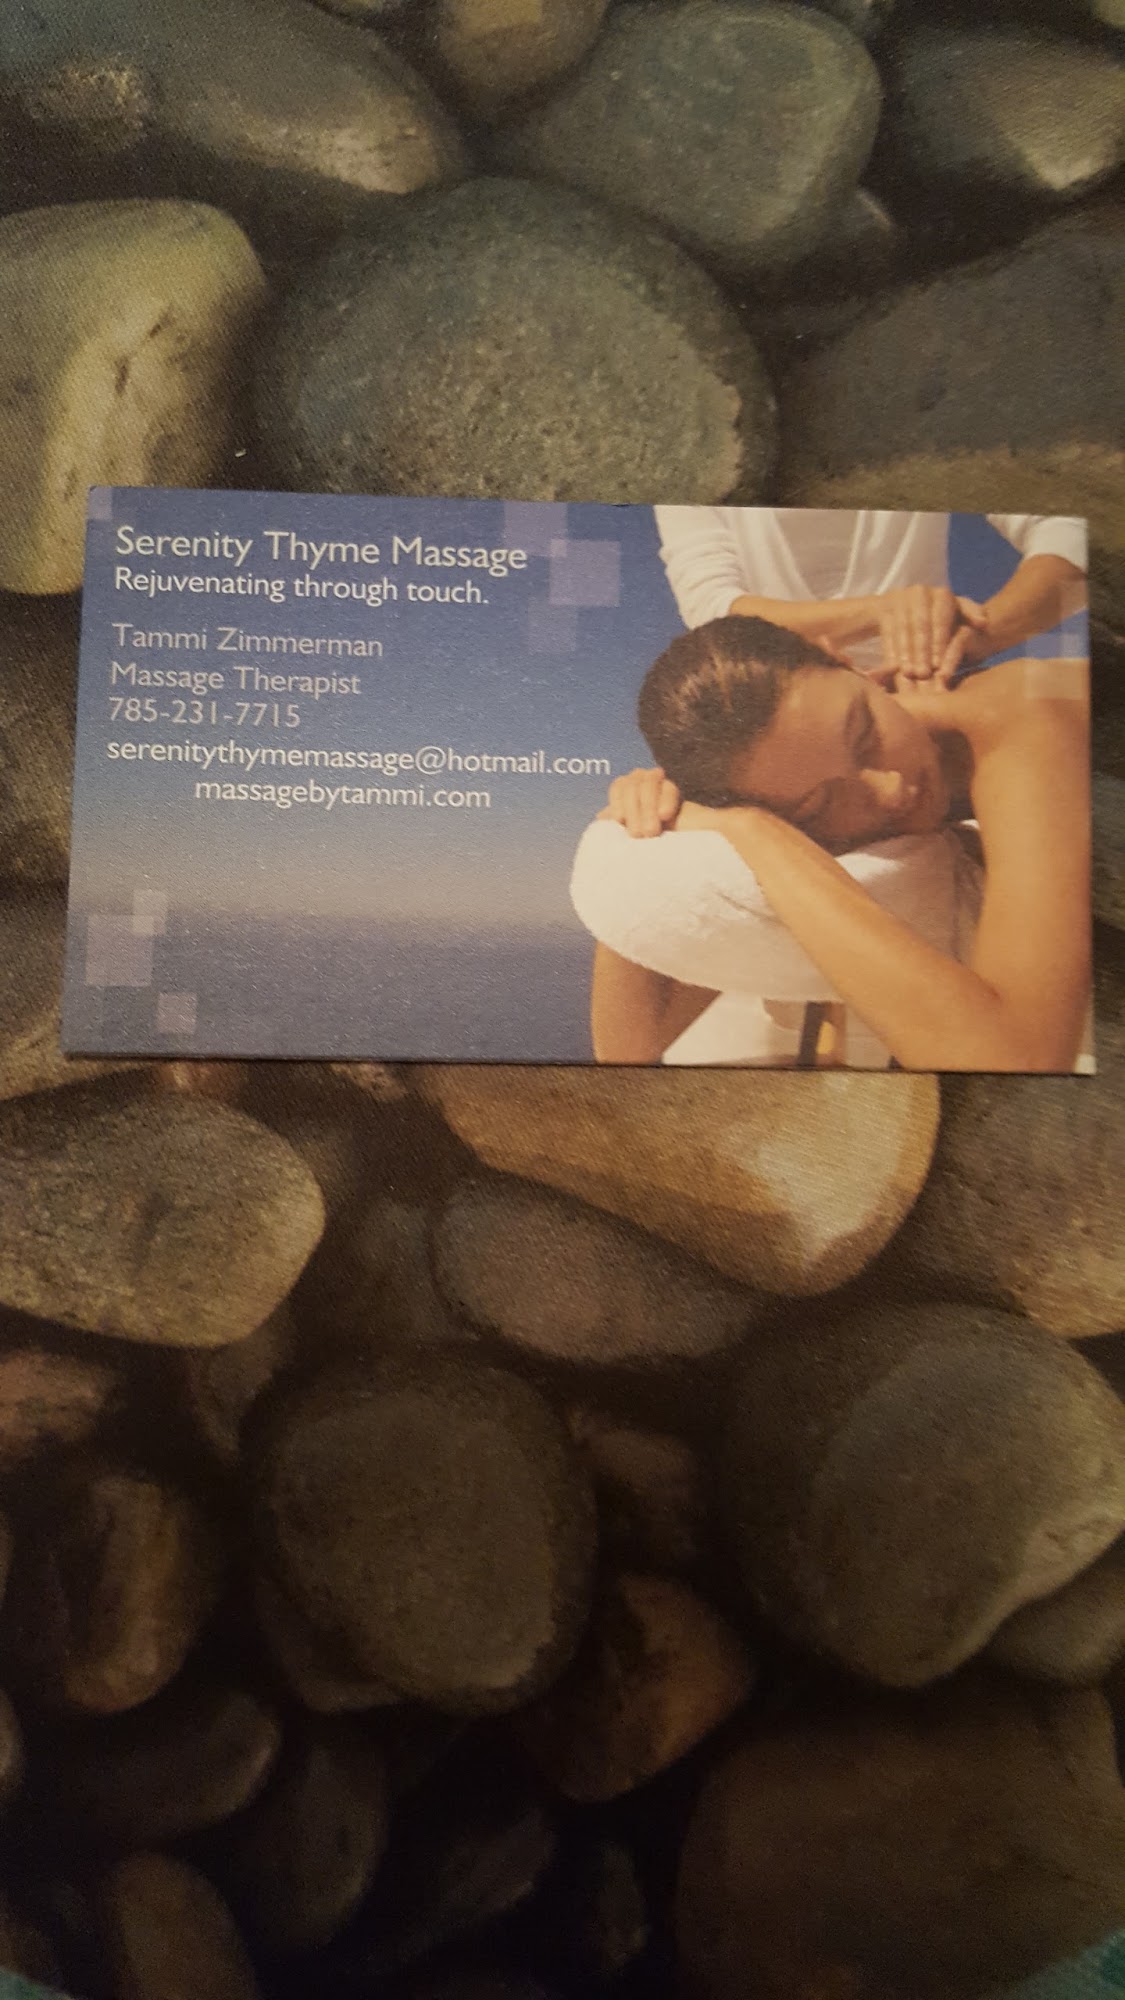 Serenity Thyme Massage